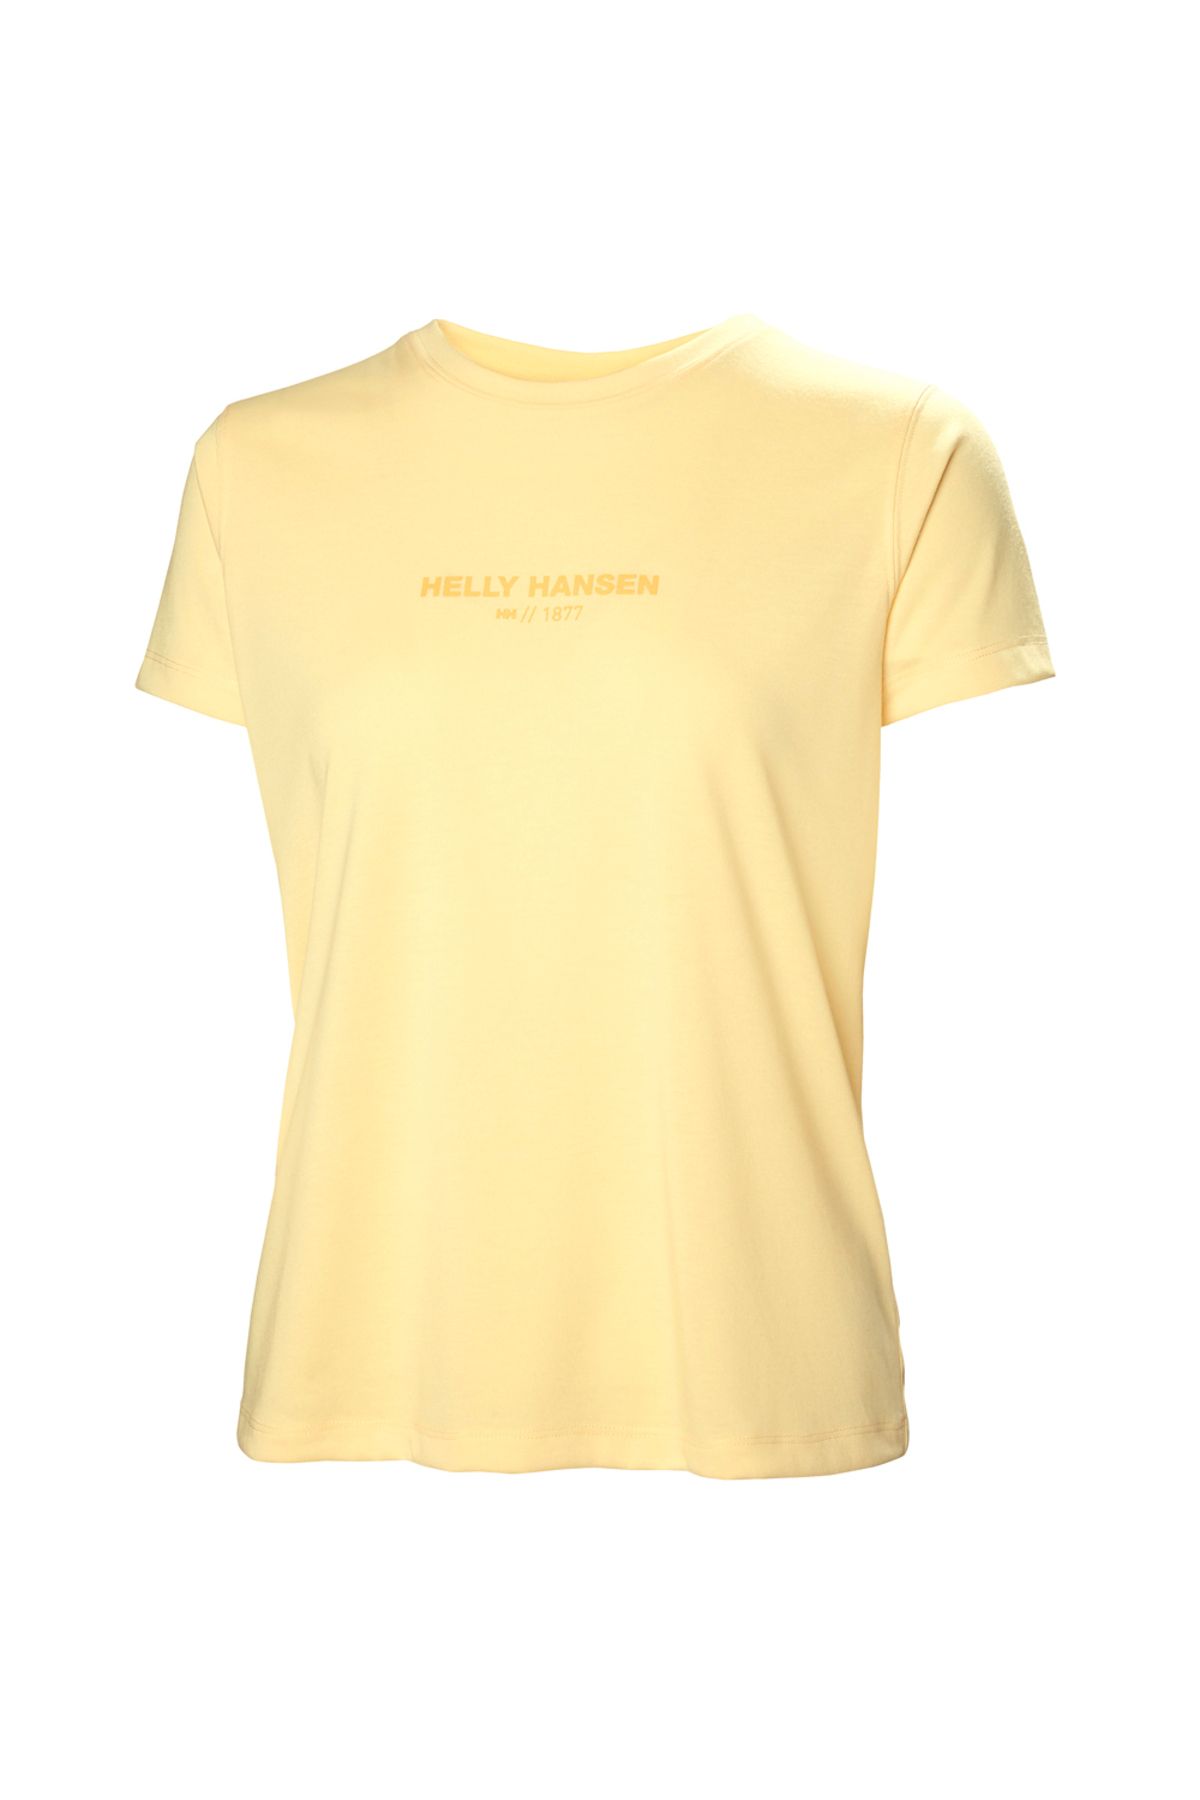 Helly Hansen Allure Kadın Kısa Kollu T-shirt